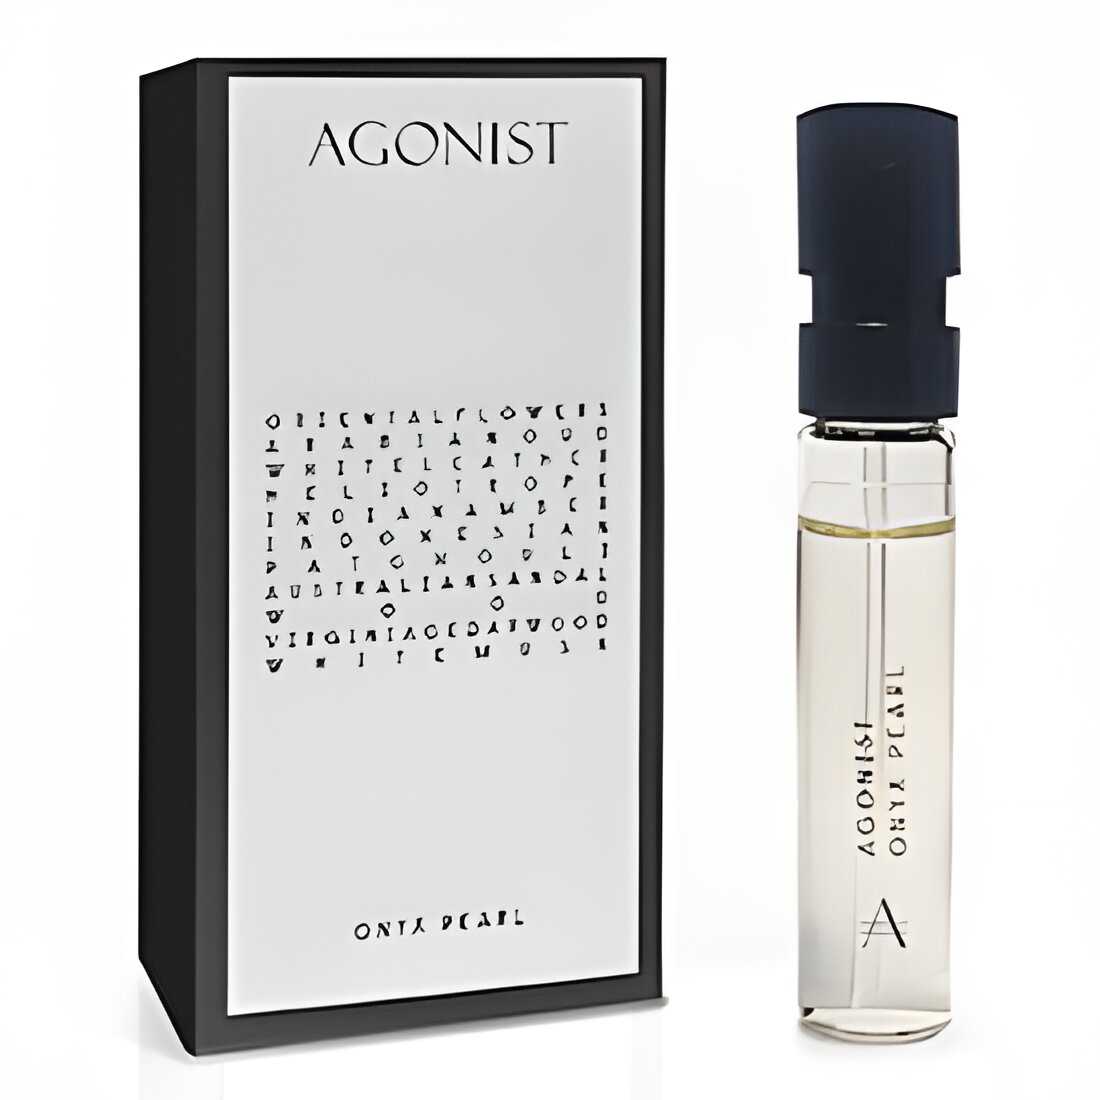 Free Agonist Onyx Pearl Perfume Sample